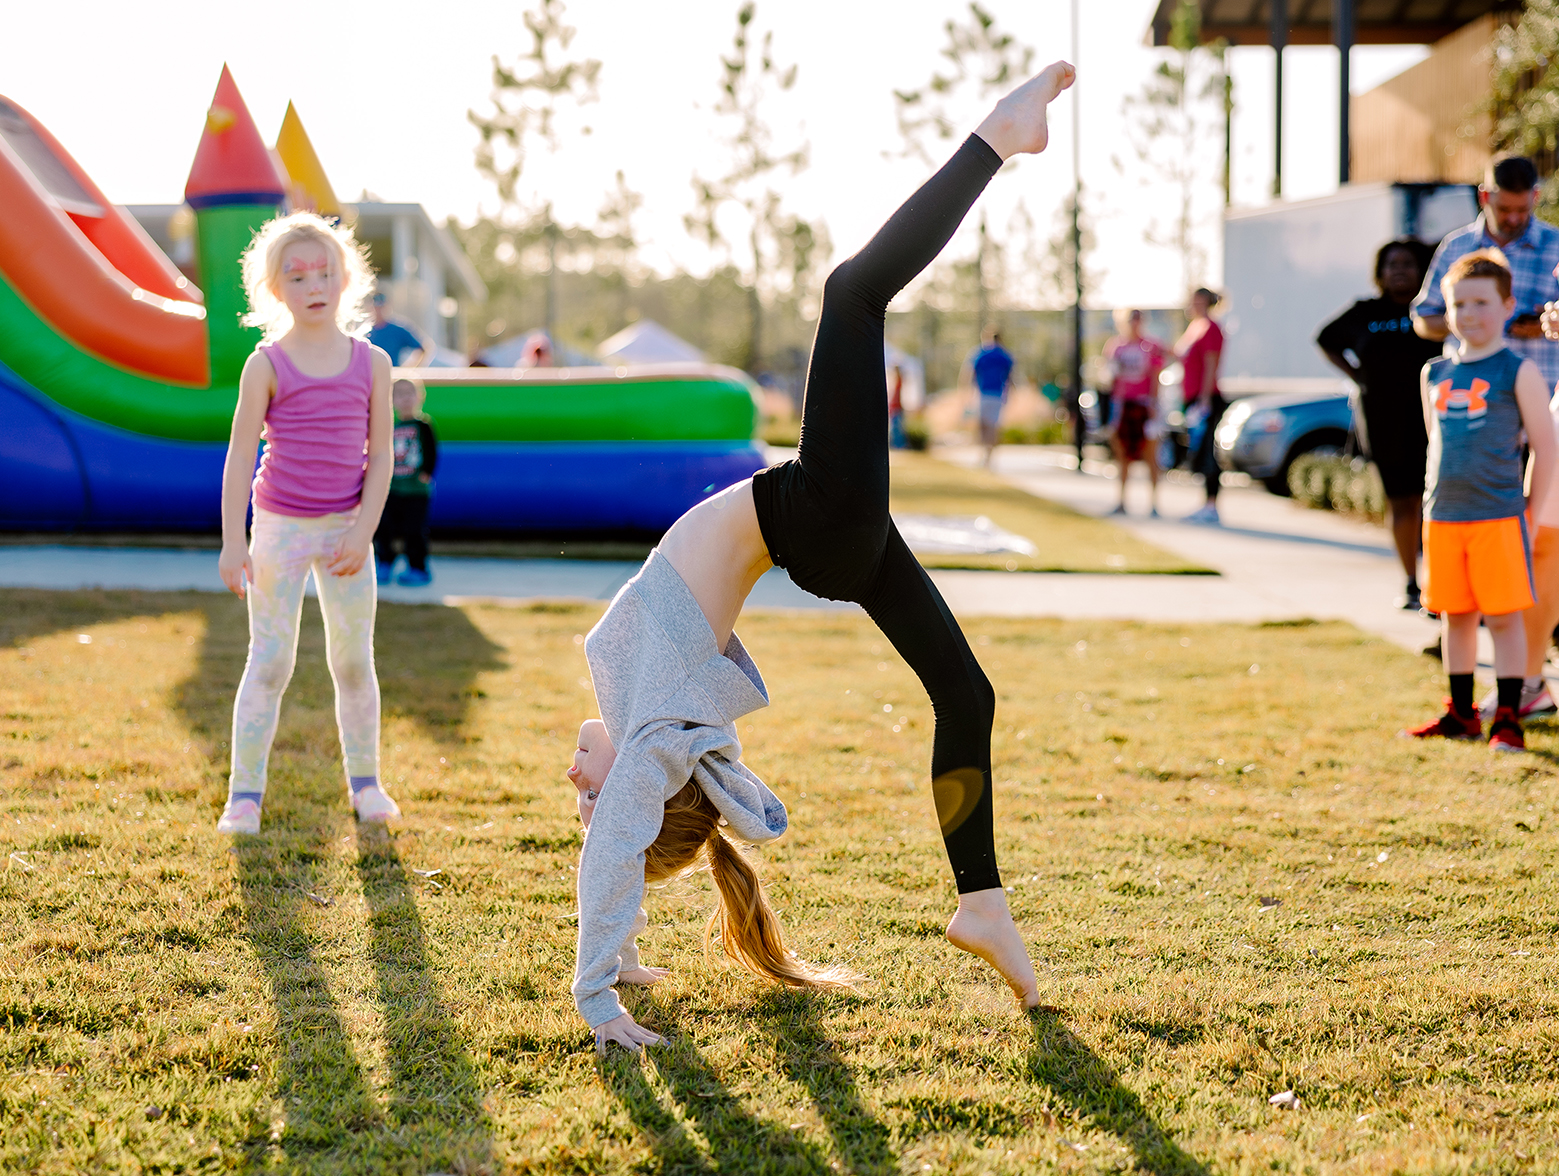 Girl practices gymnastics at lawn in Wildlight.